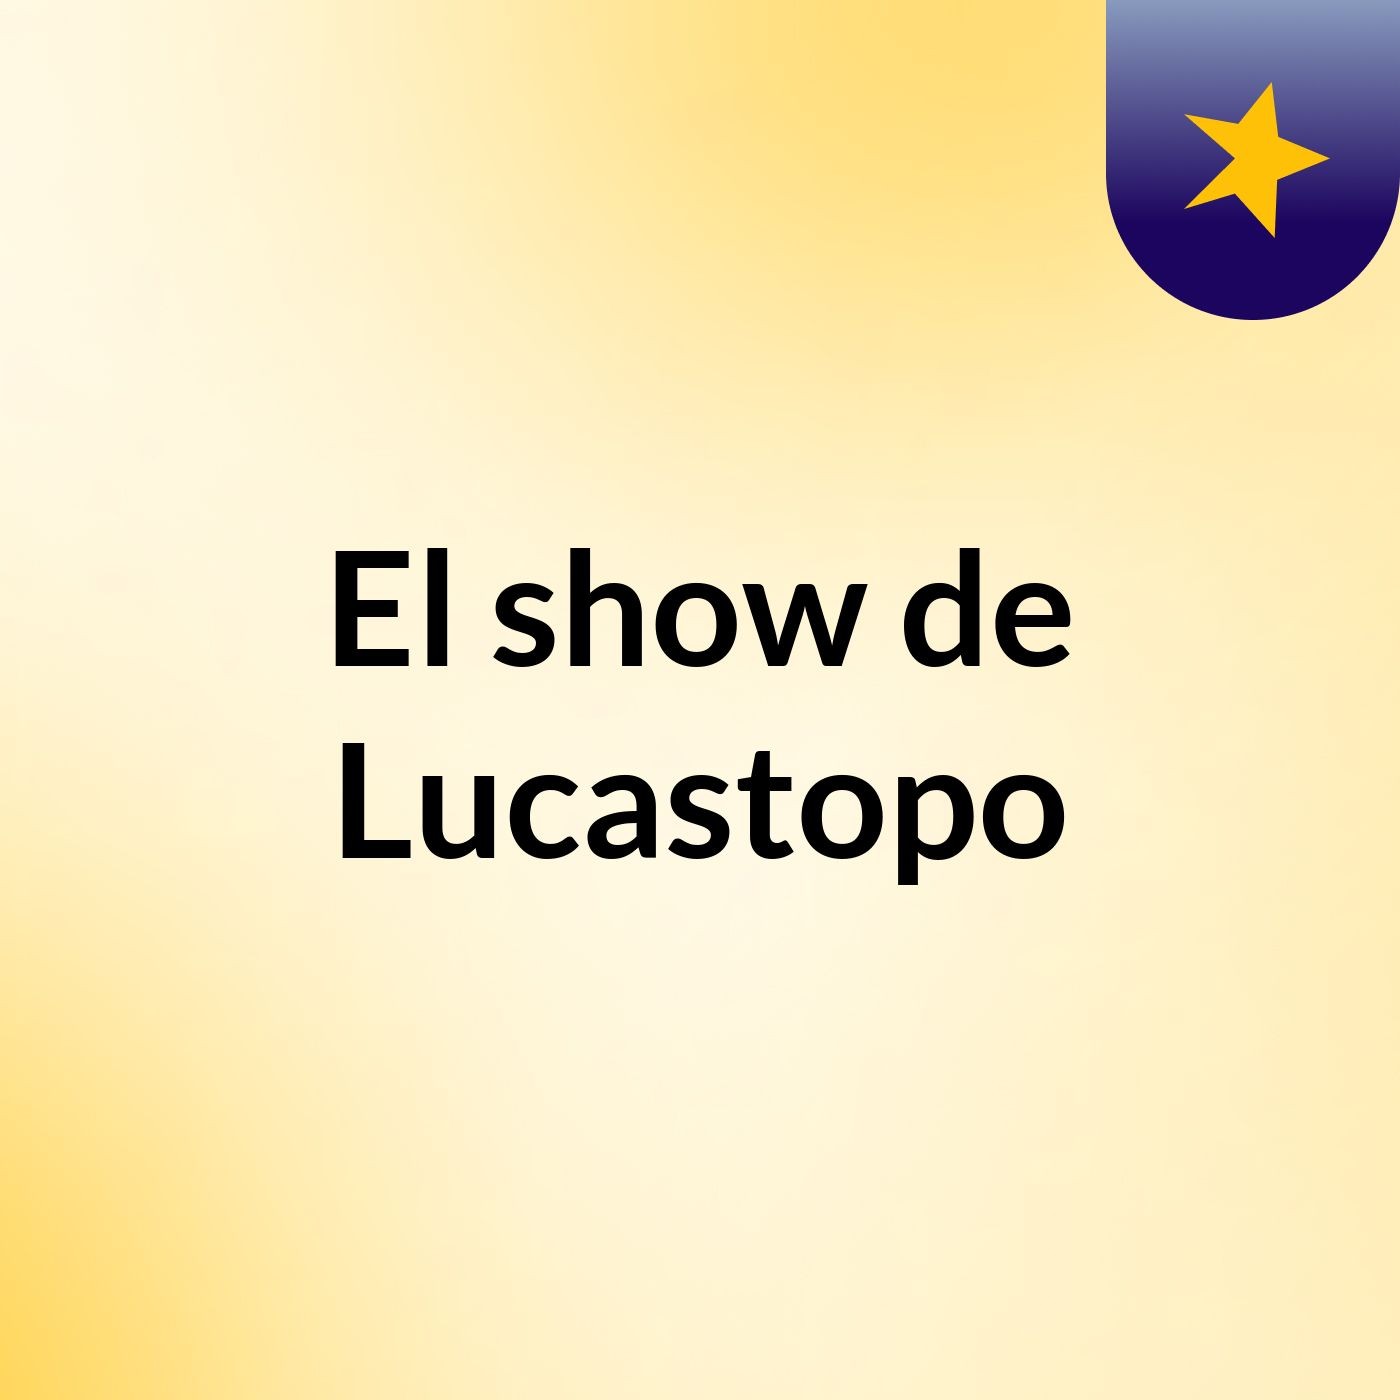 El show de Lucastopo